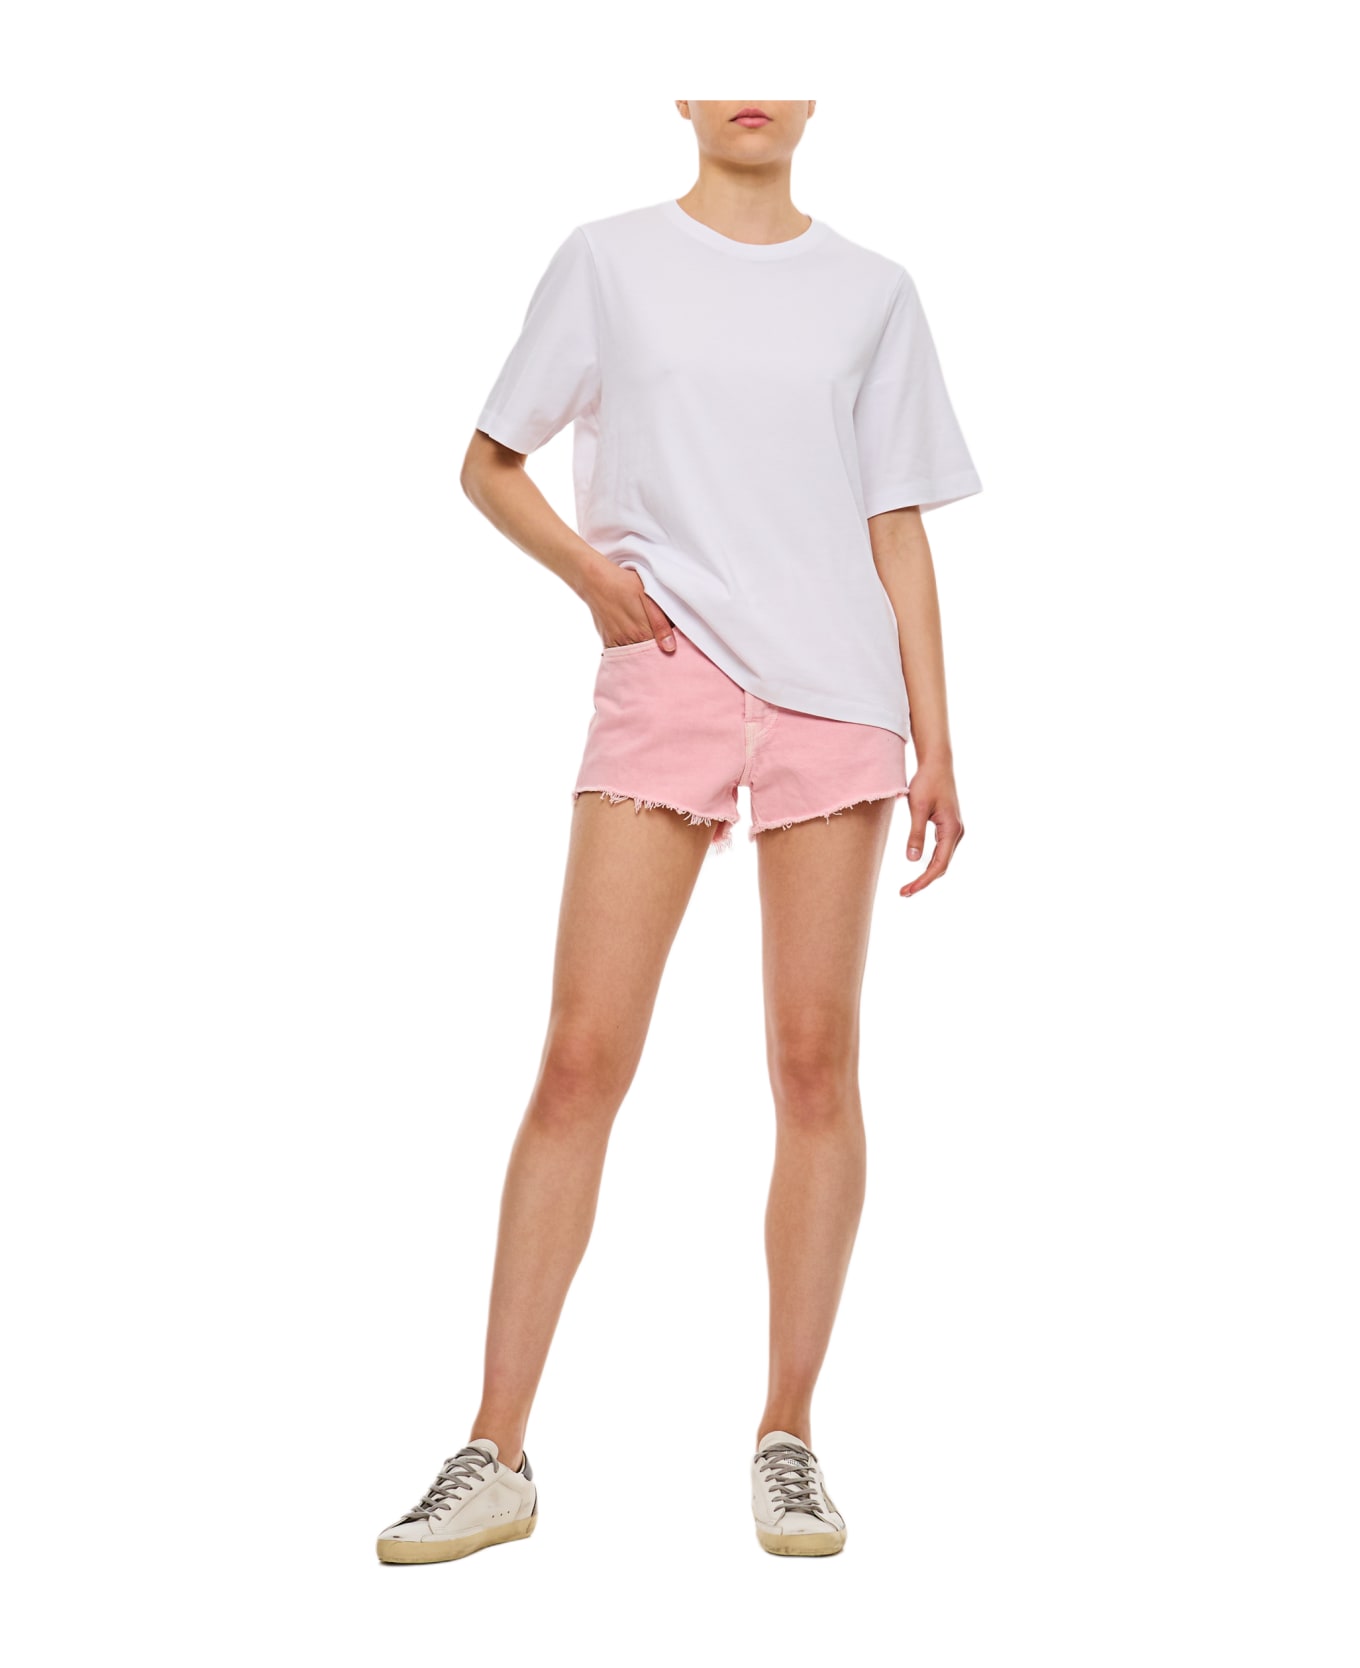 Levi's 501 Original Short Pants - Pink ショートパンツ